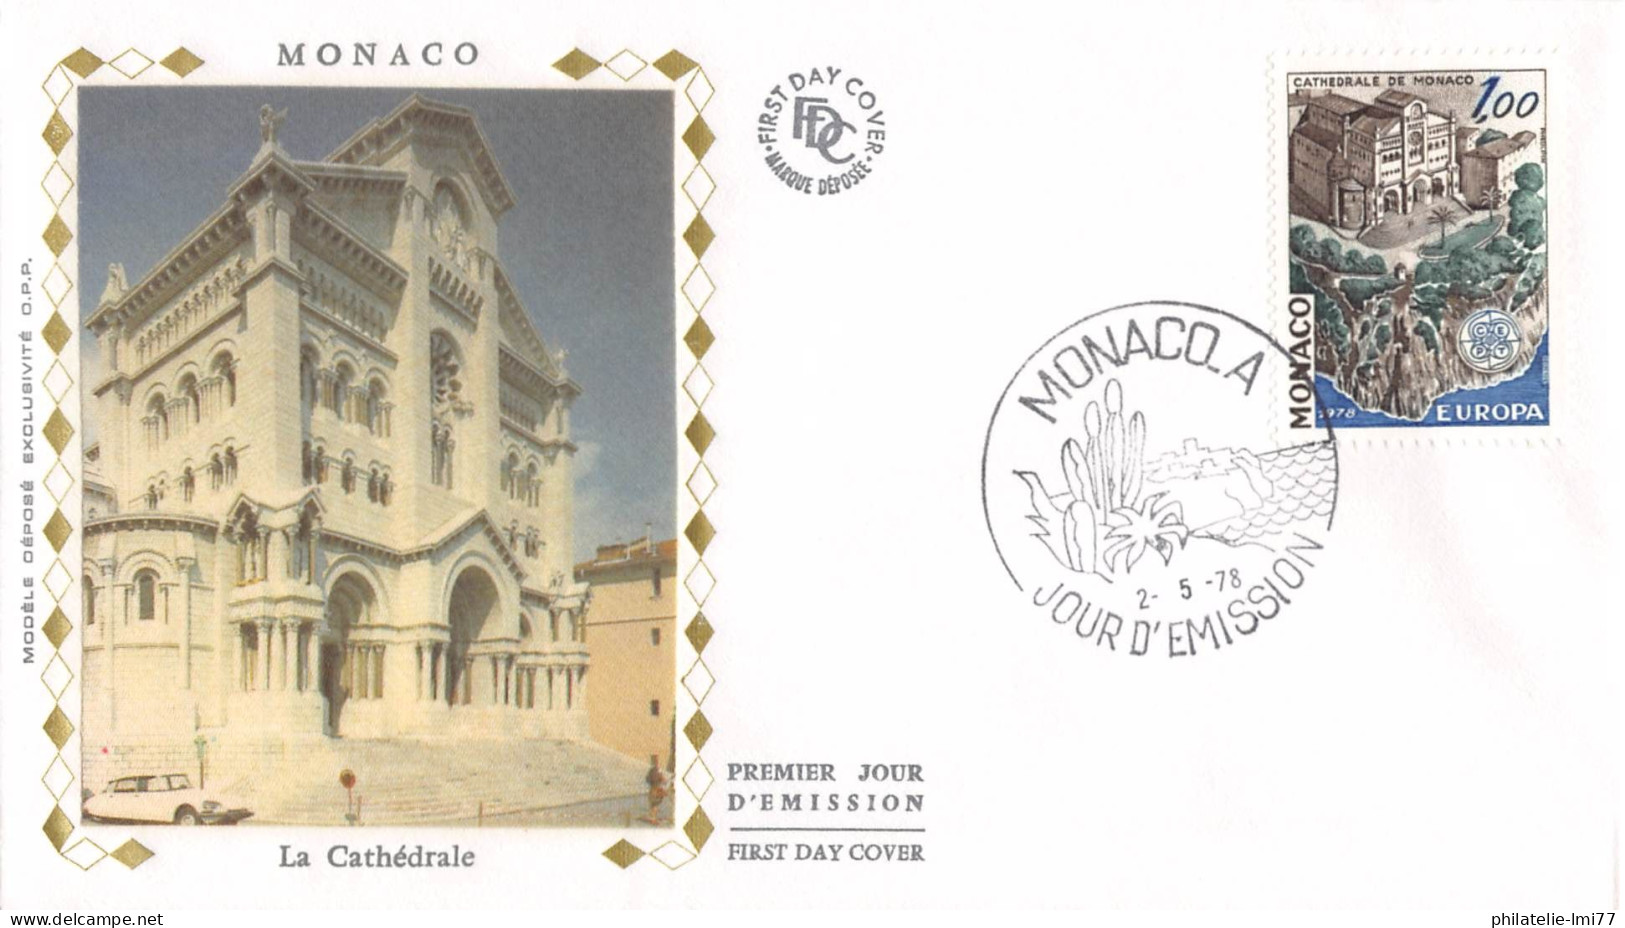 Monaco - FDC Europa 1978 - 1978